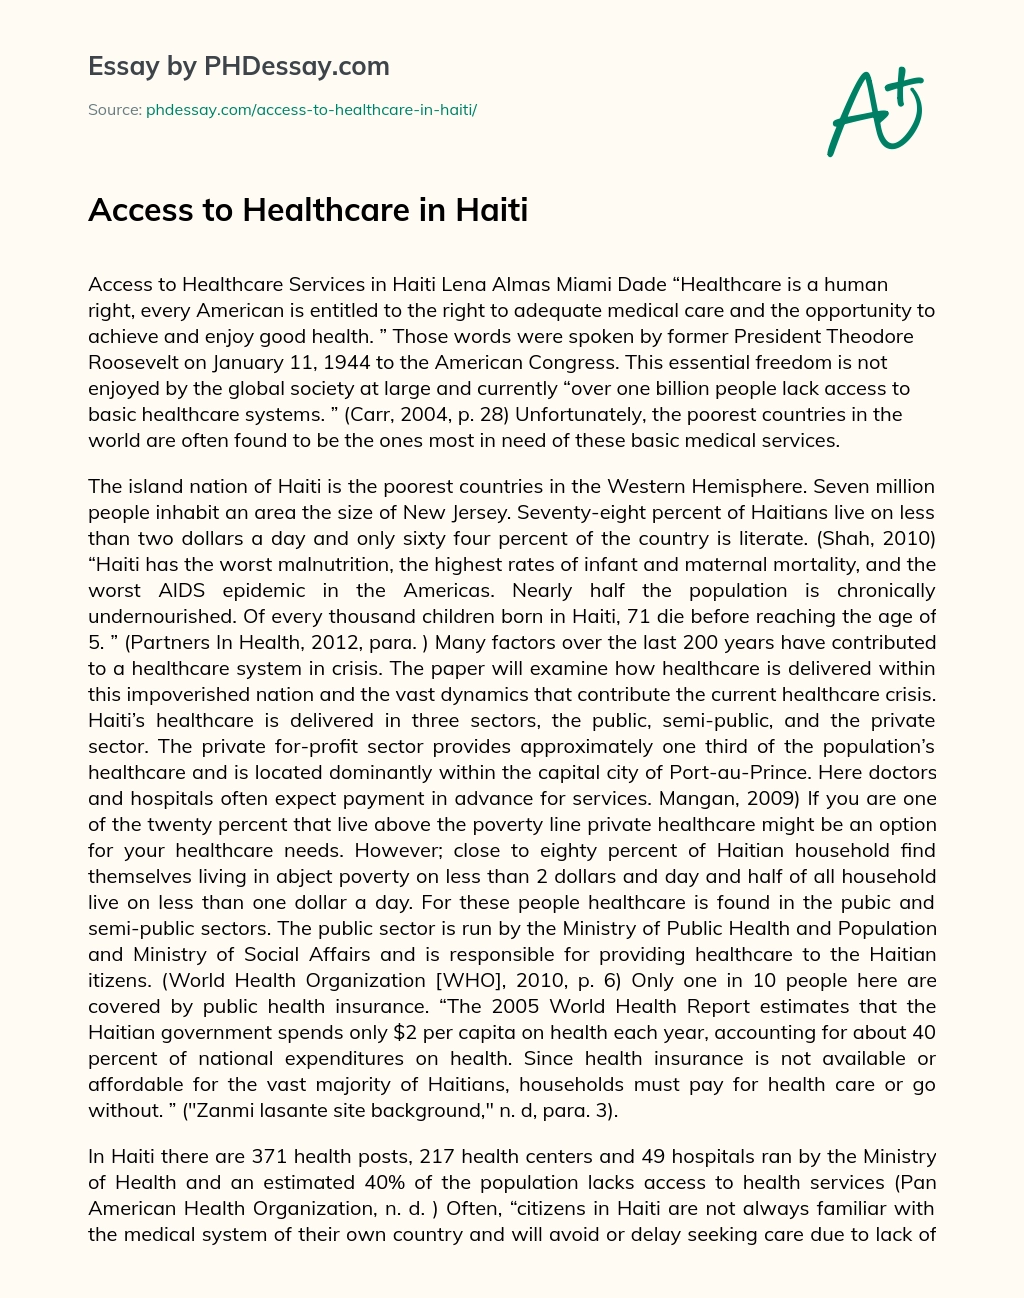 Access to Healthcare in Haiti essay